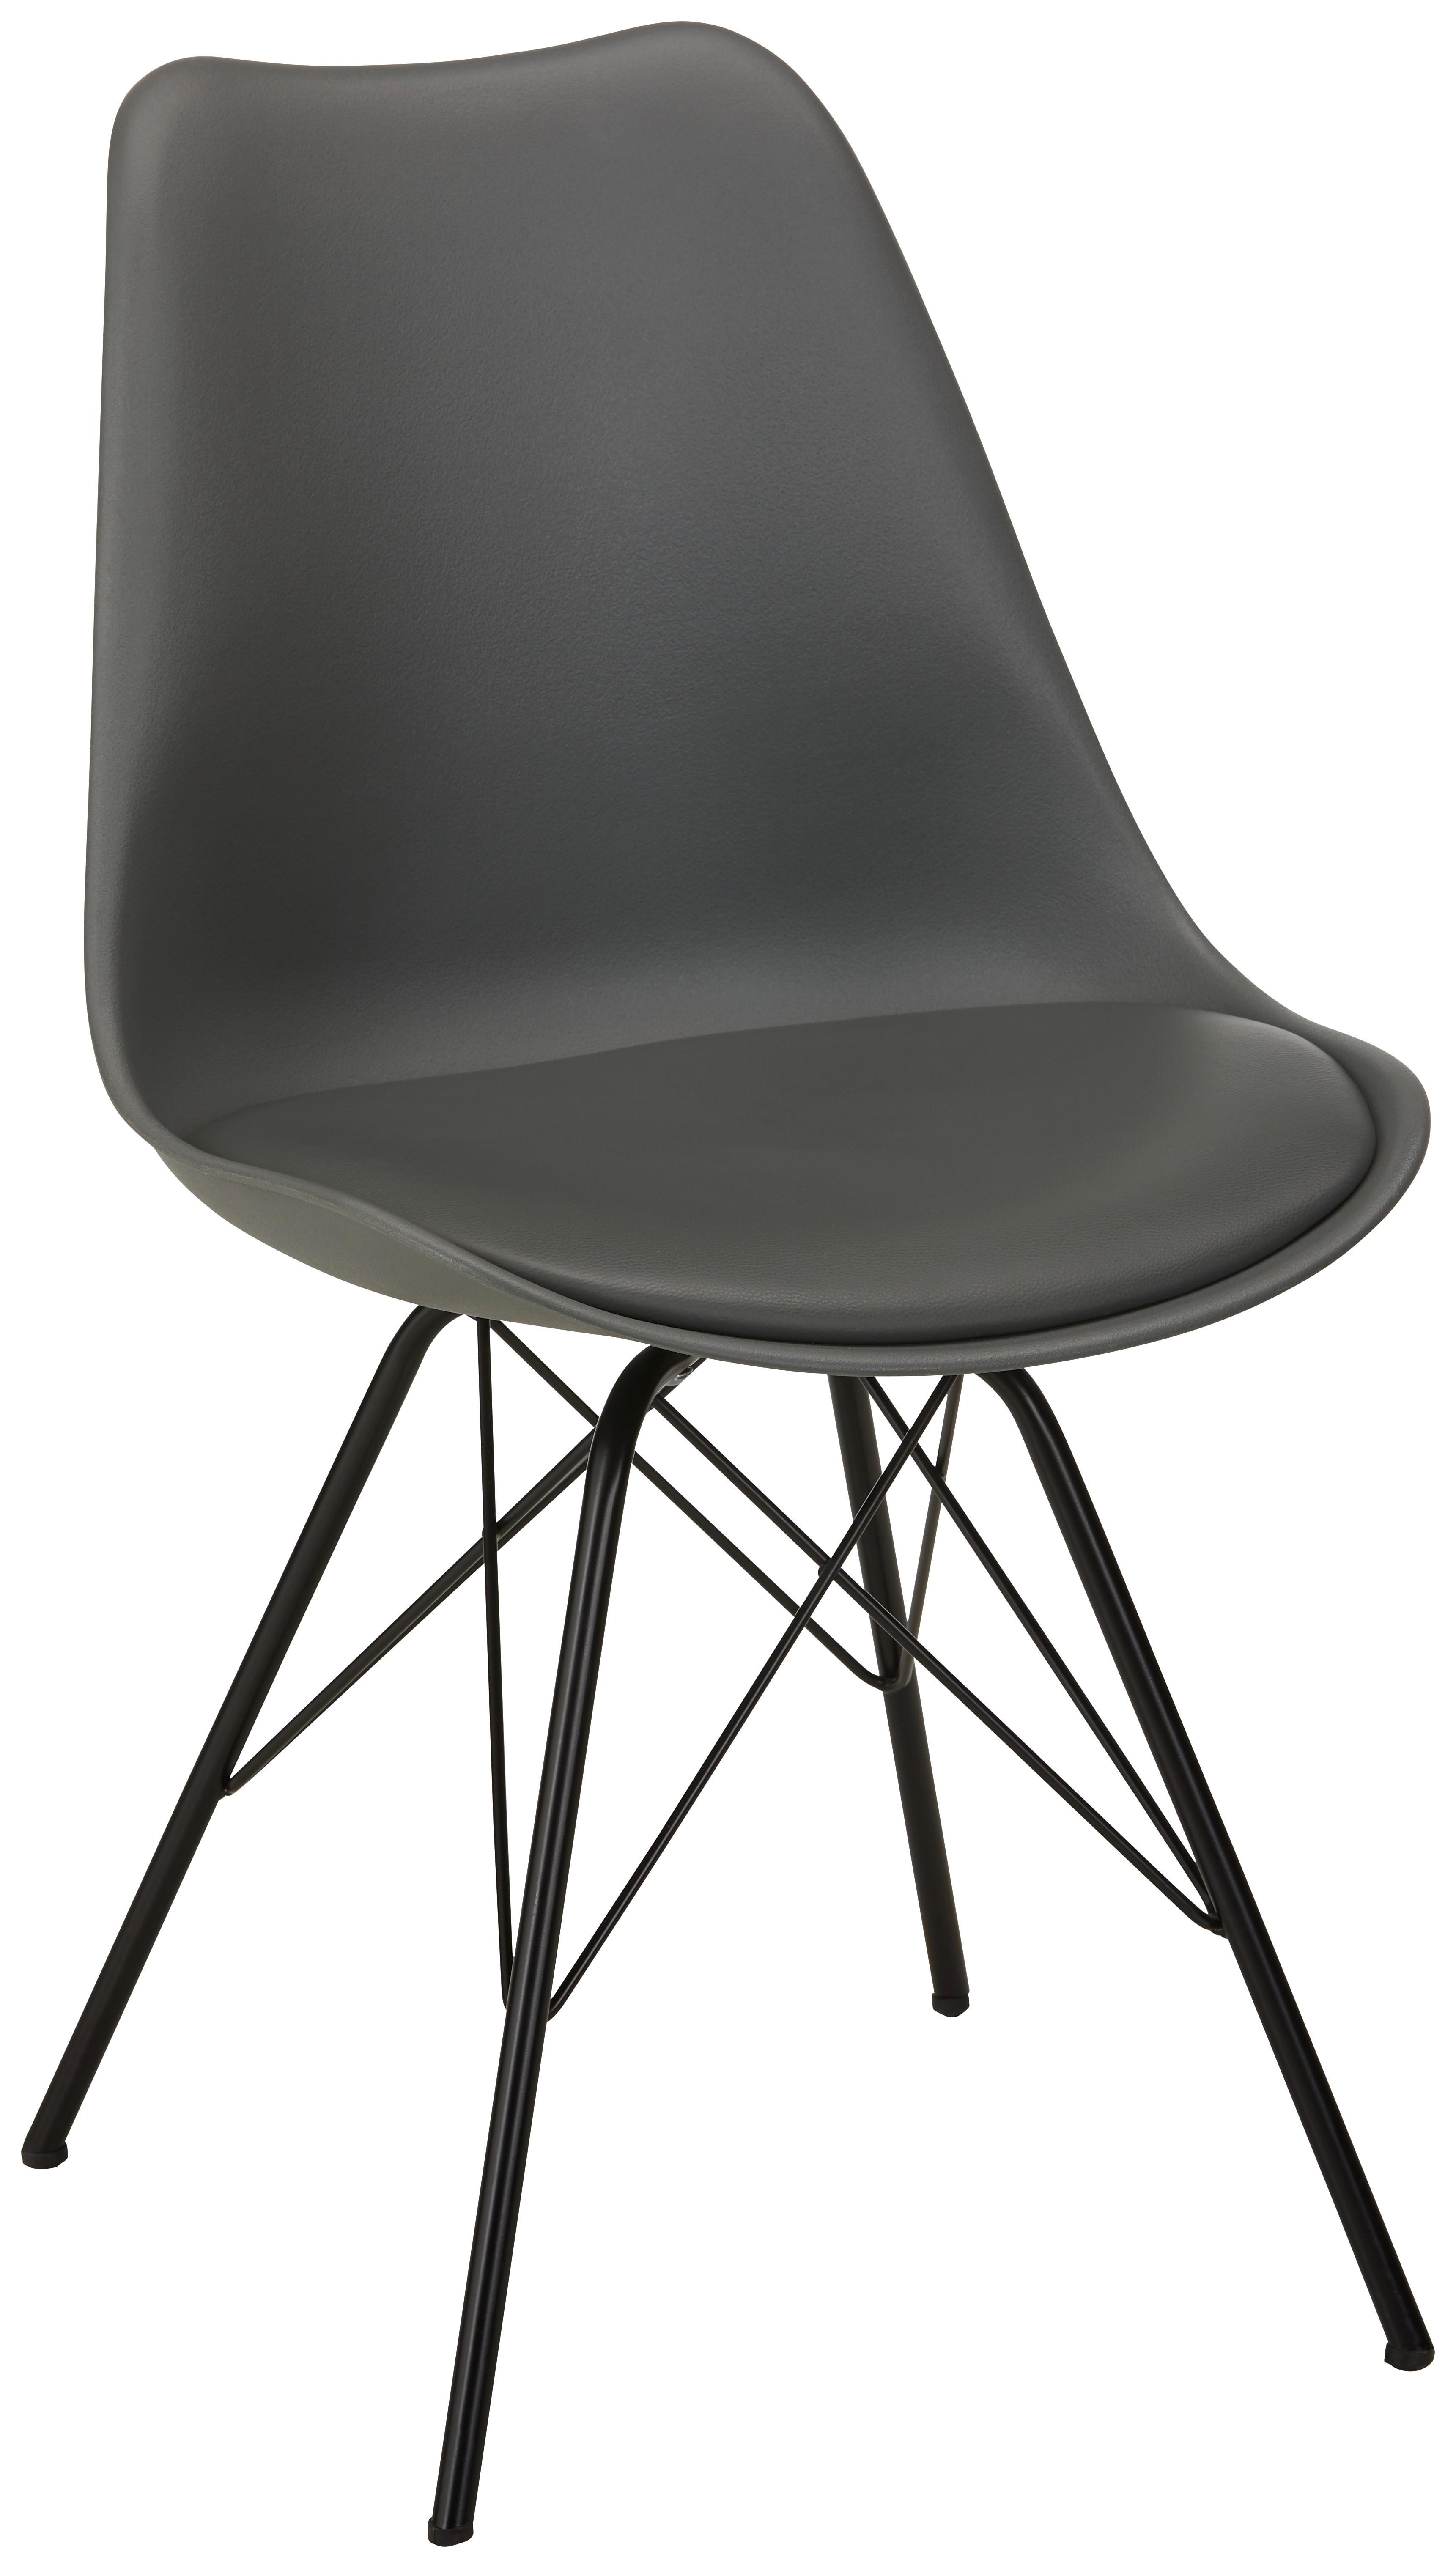 Stuhl in Grau - Schwarz/Grau, Modern, Kunststoff/Textil (55,5/86/48cm) - Modern Living